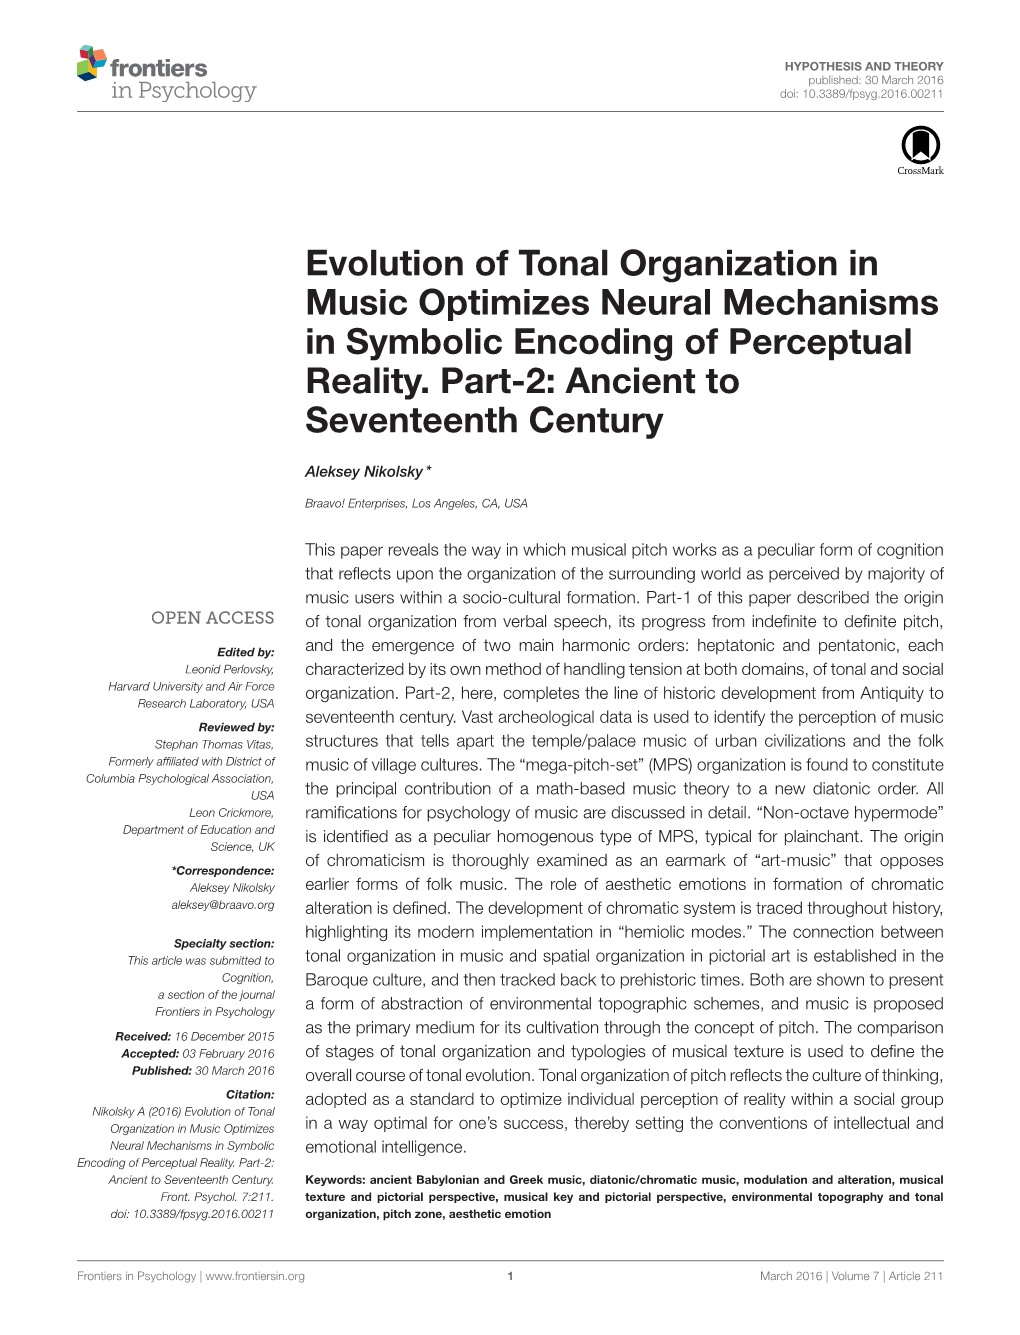 Evolution of Tonal Organization in Music Optimizes Neural Mechanisms in Symbolic Encoding of Perceptual Reality